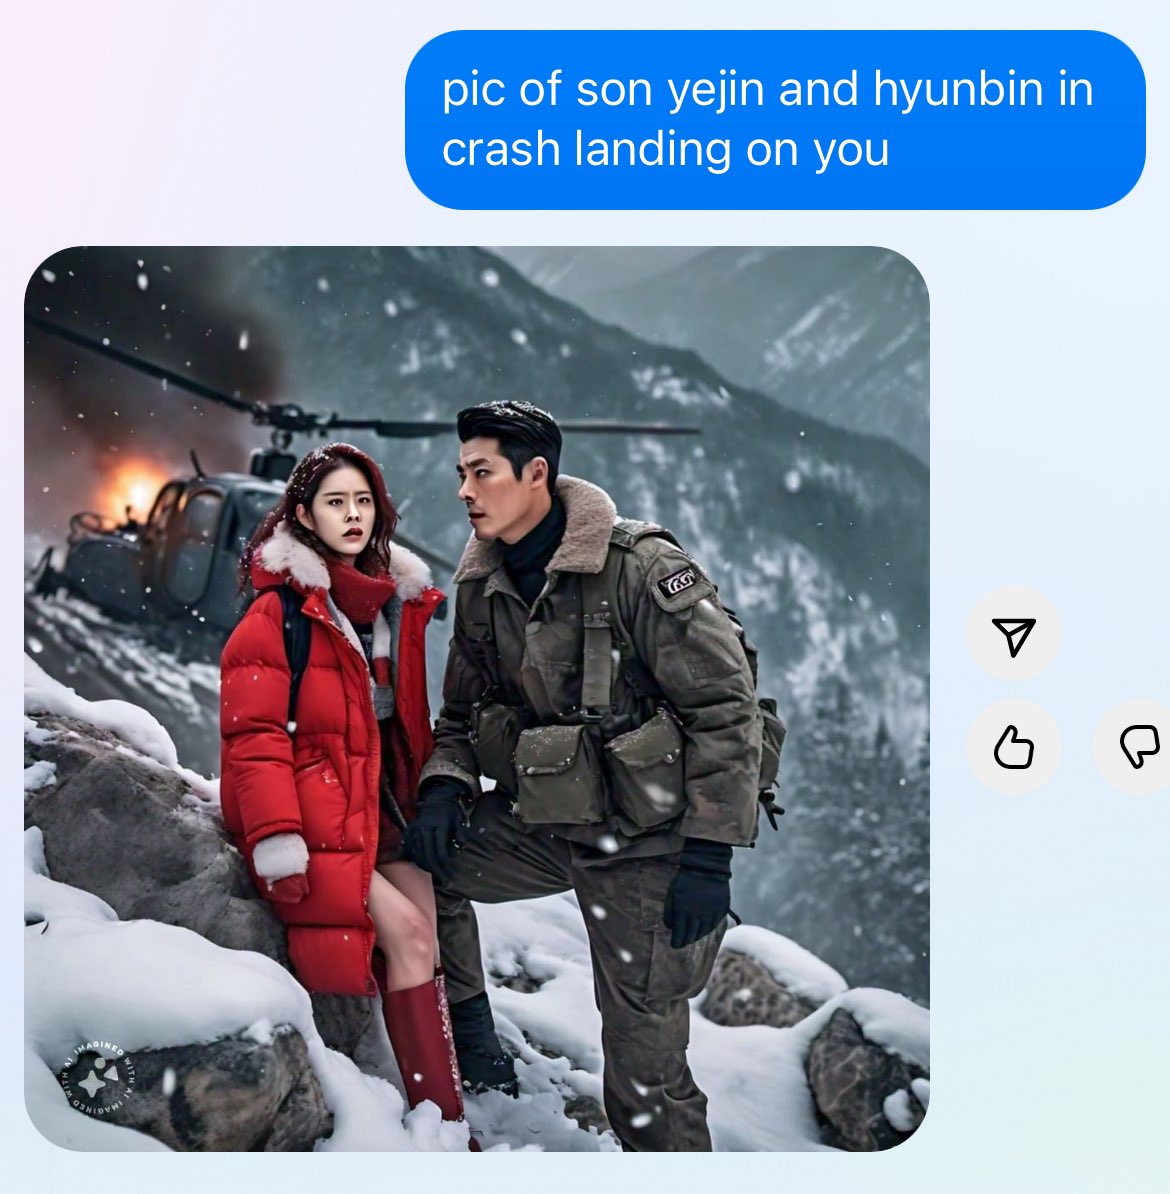 son yejin and hyunbin in crash landing on you per instagram’s meta AI